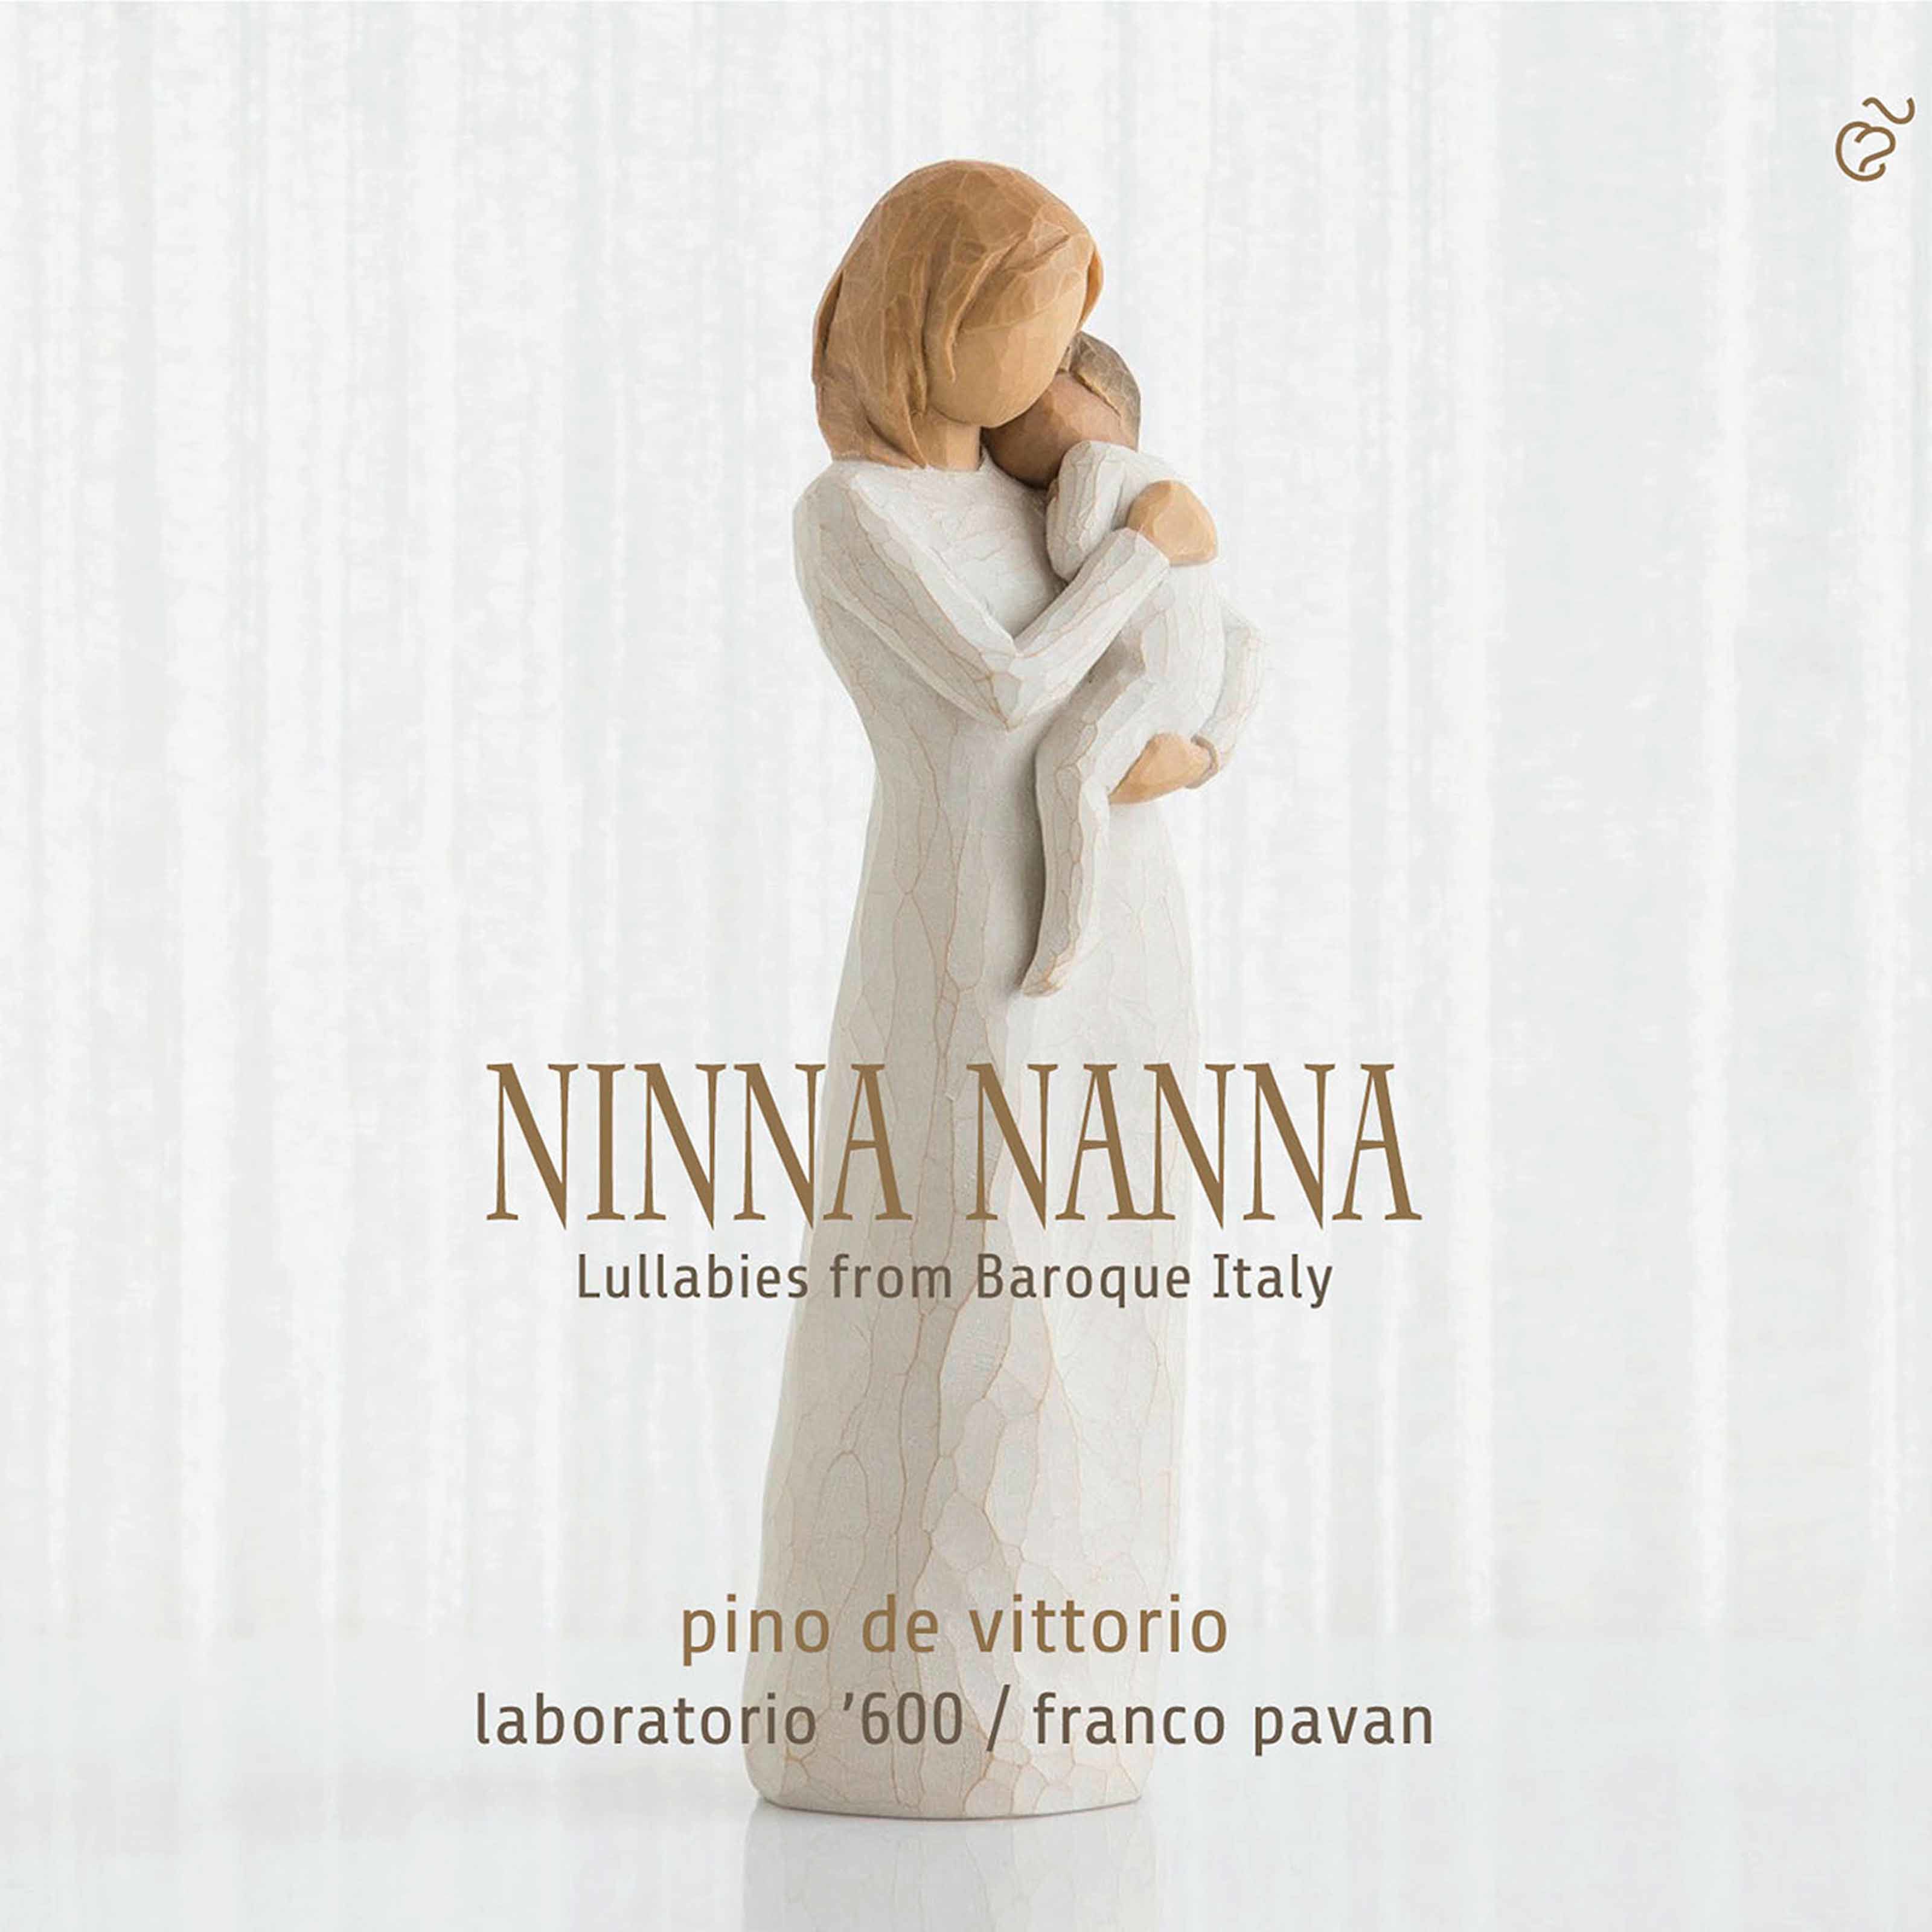 Franco Pavan, Laboratorio ‘600, Pino de Vittorio – Ninna nanna: Lullabies from Baroque Italy (2020) [FLAC 24bit/96kHz]